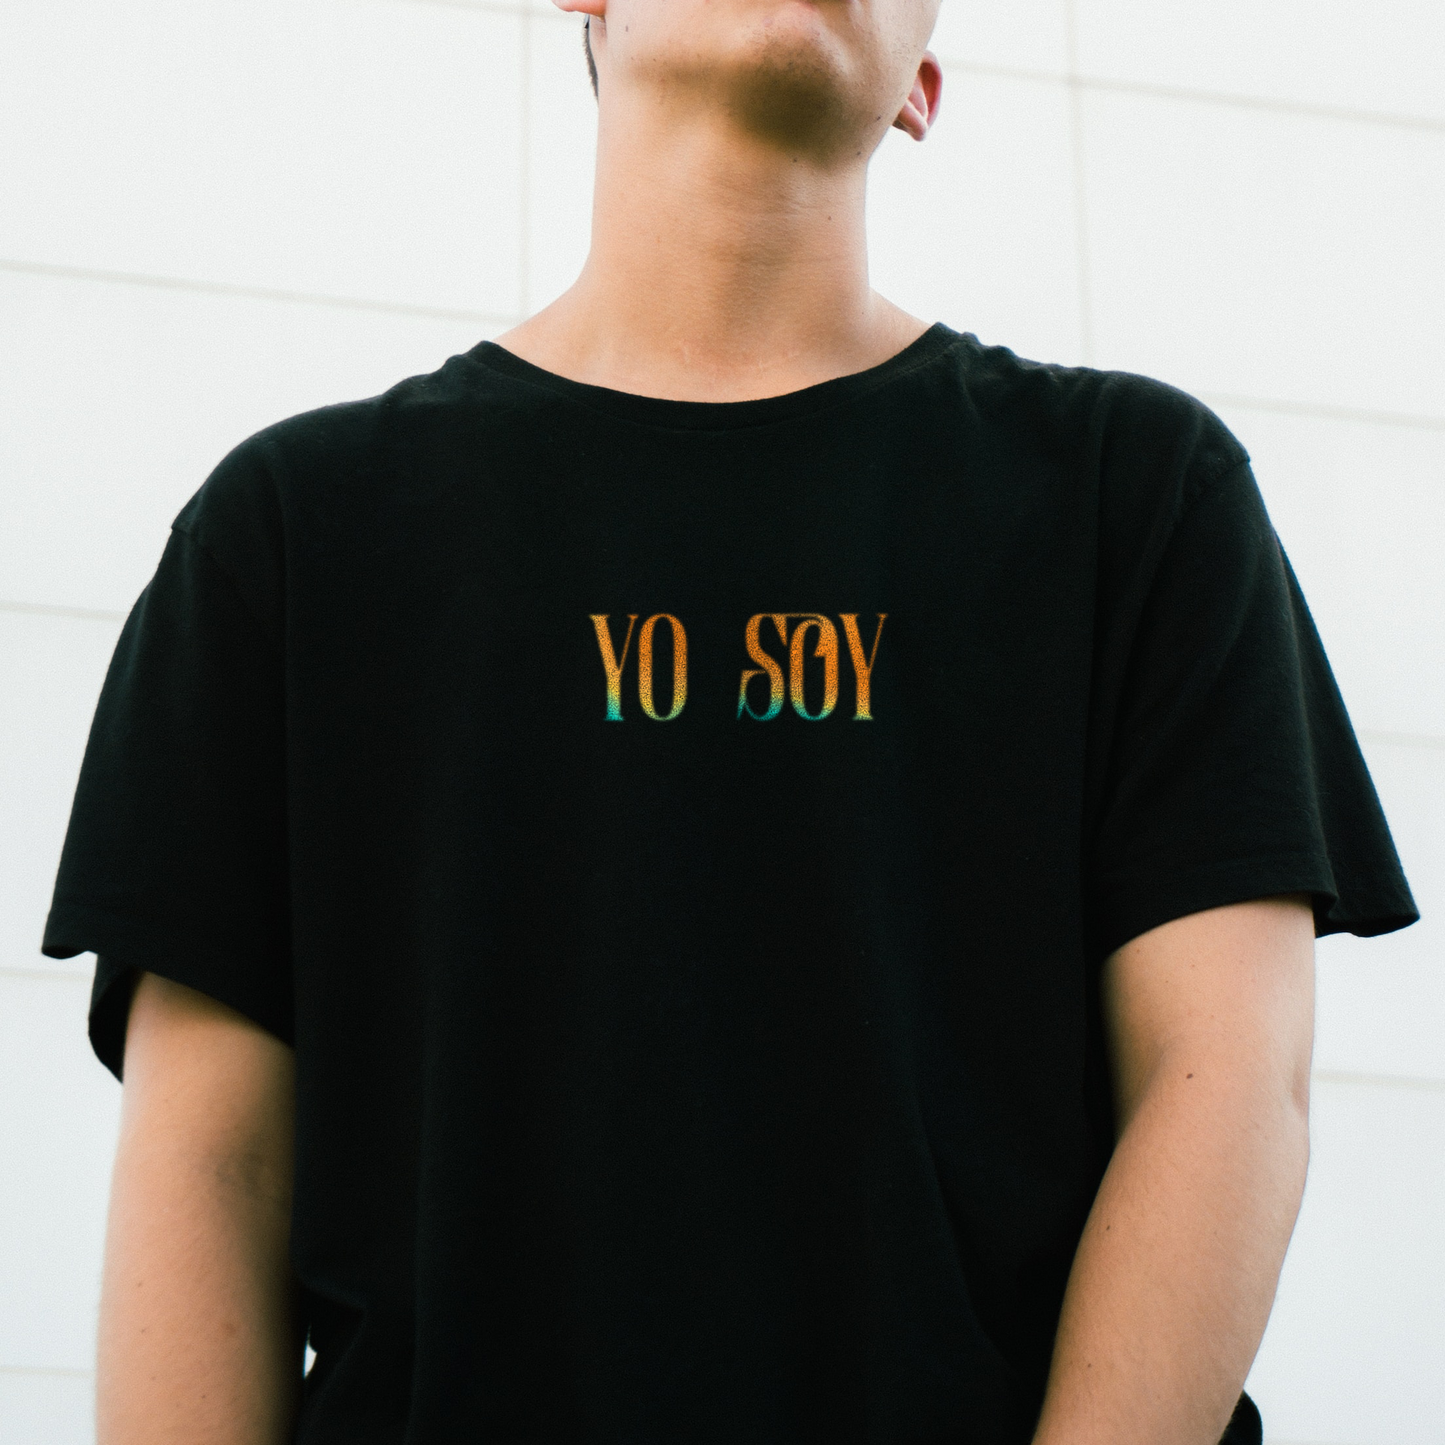 "YO SOY" T-shirt (Spanish)